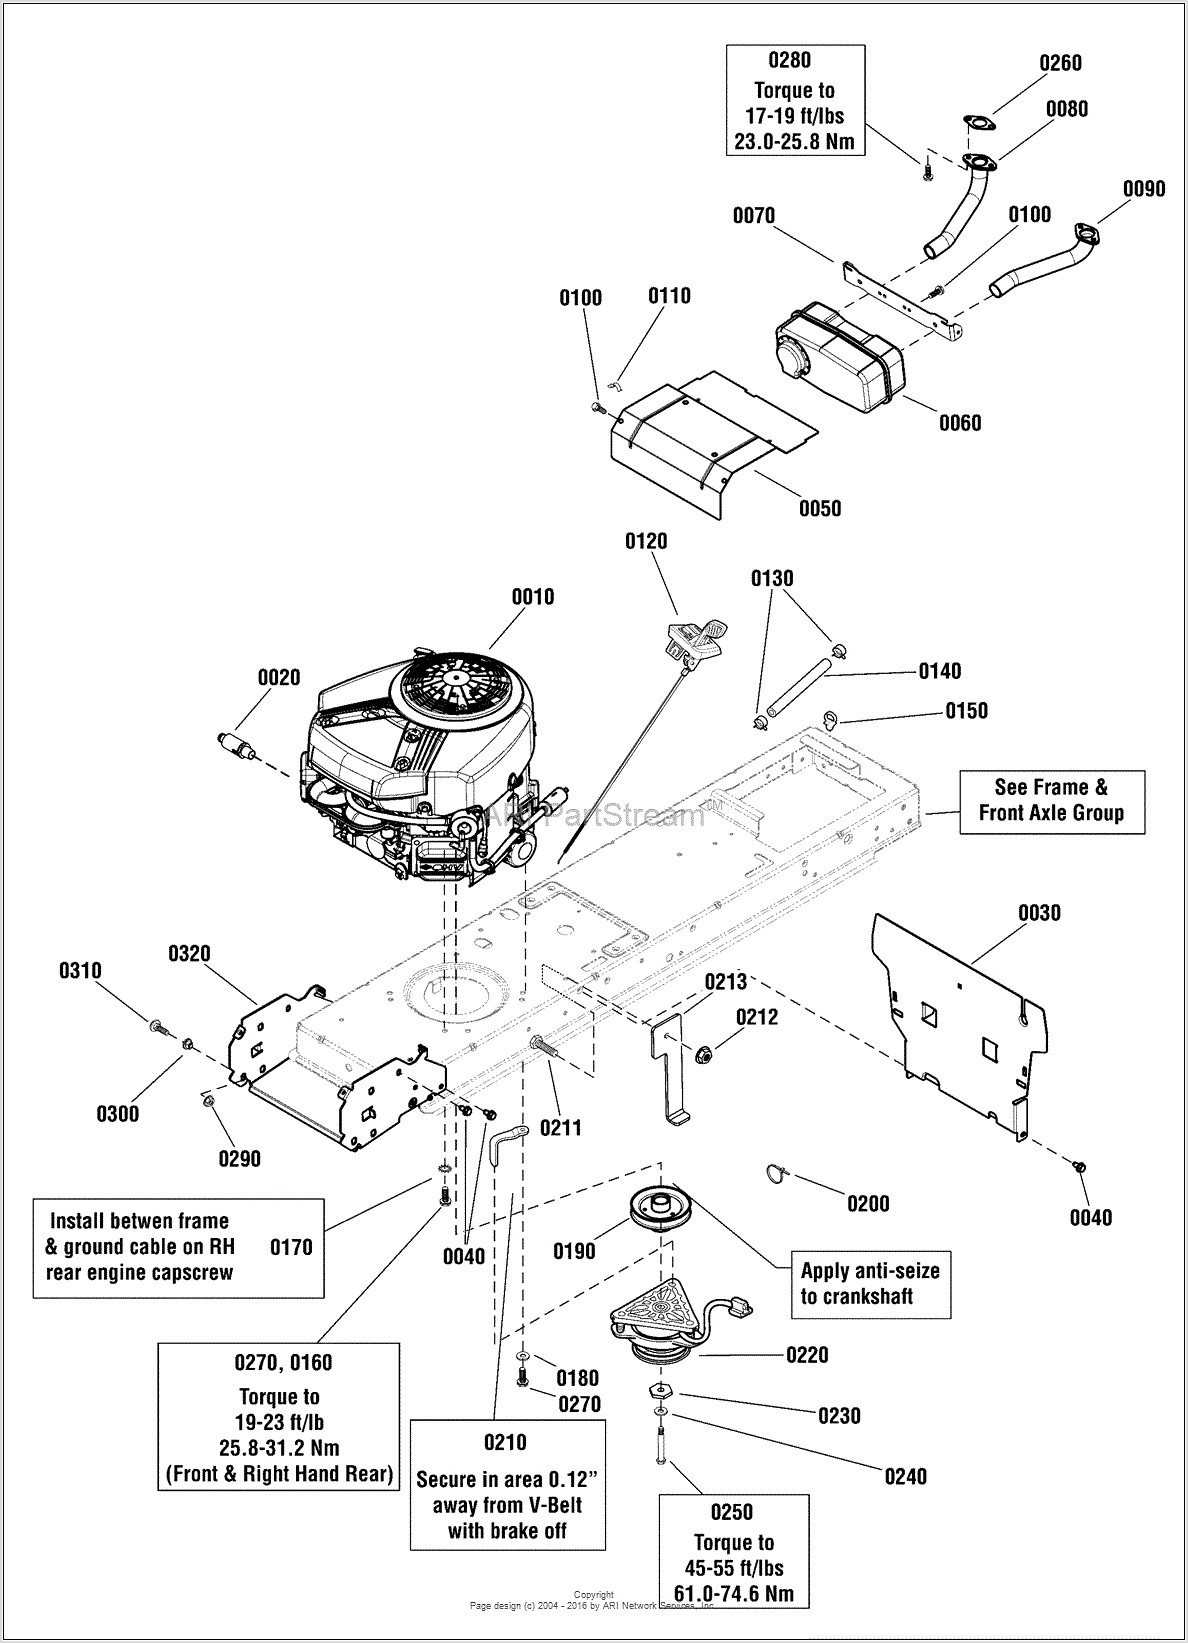 18 Hp Briggs And Stratton Engine Diagram